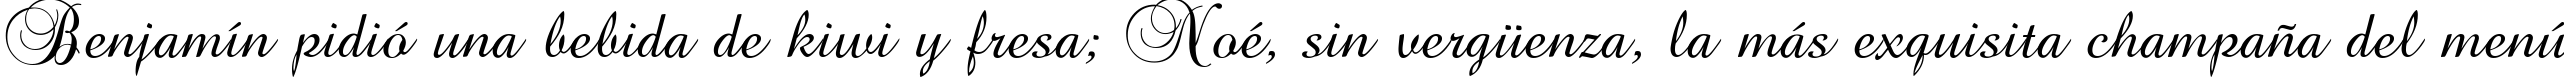 Пример написания шрифтом Brock Script текста на испанском